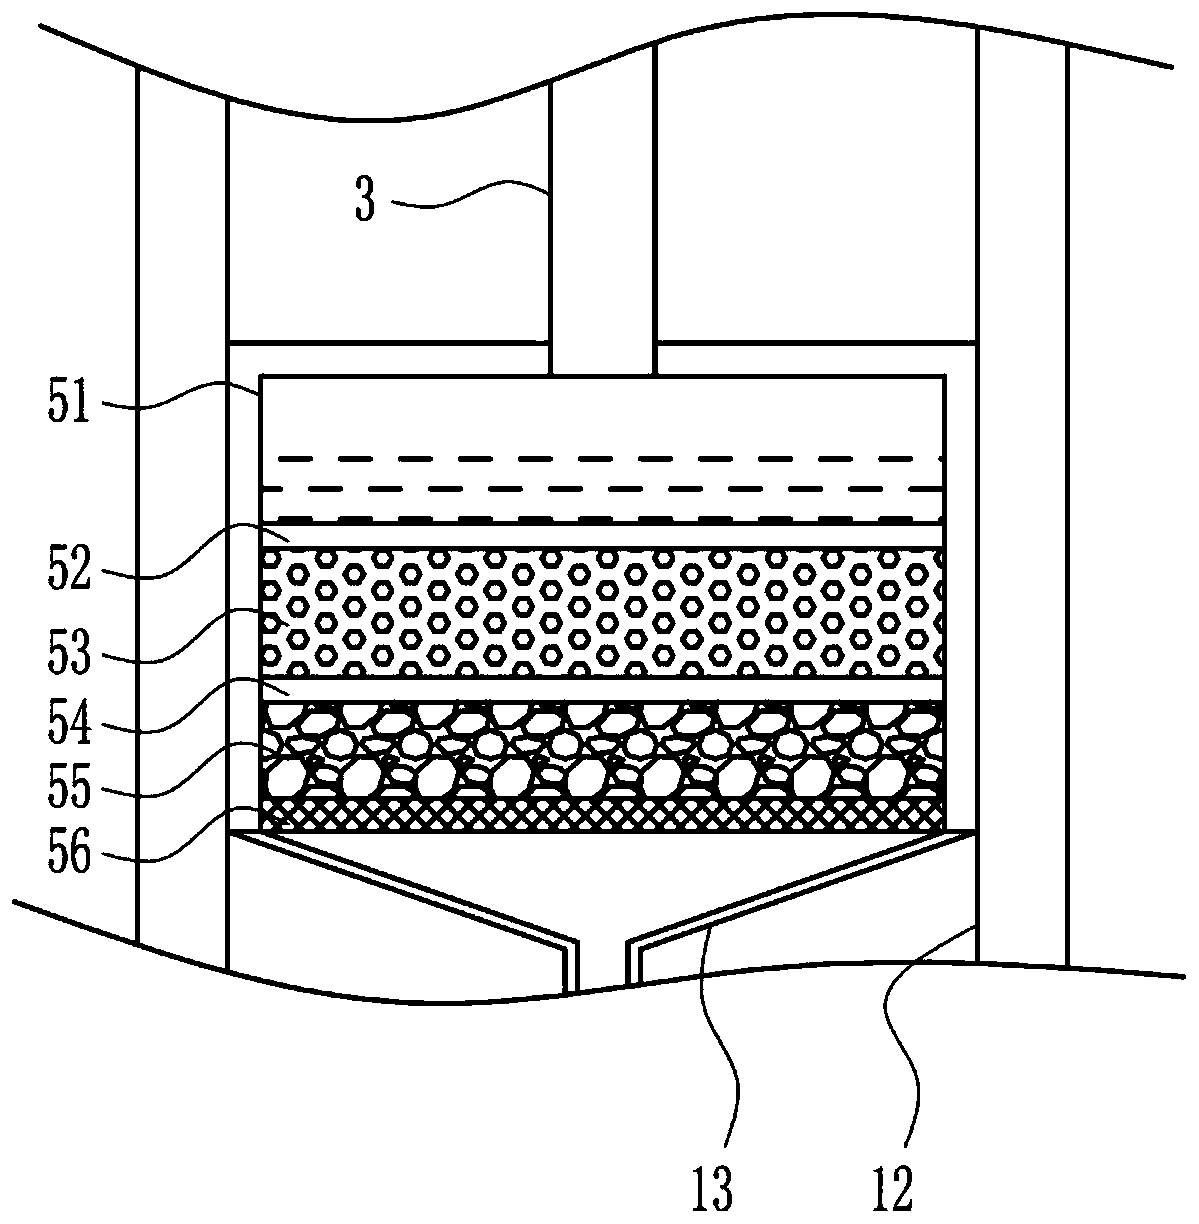 A kitchen domestic sewage treatment device